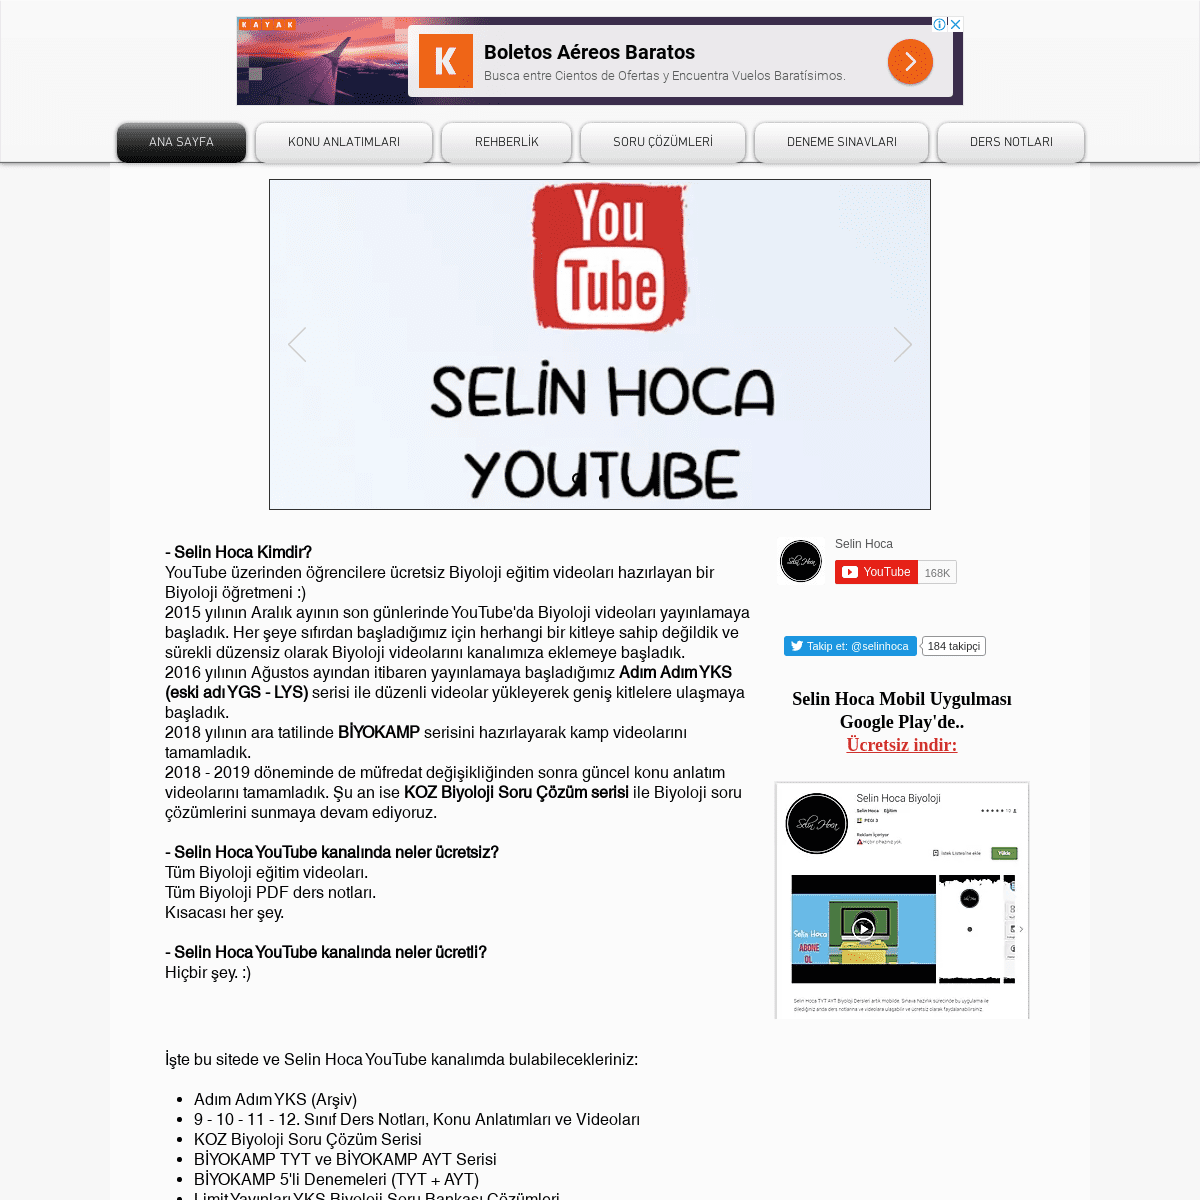 A complete backup of selinhoca.com